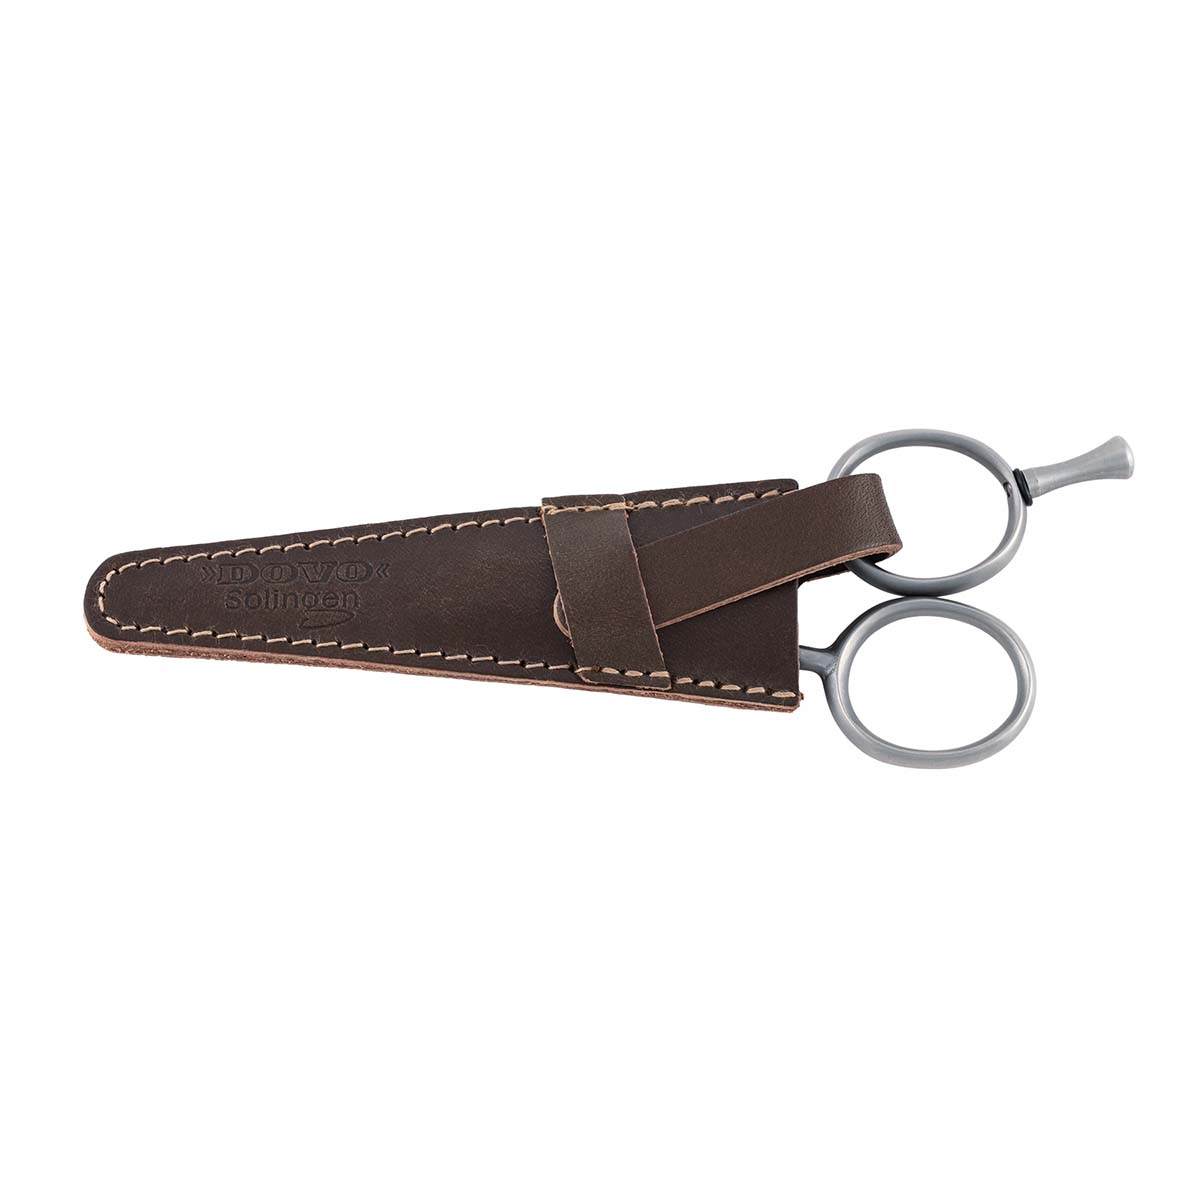 Greatest Leather Scissors